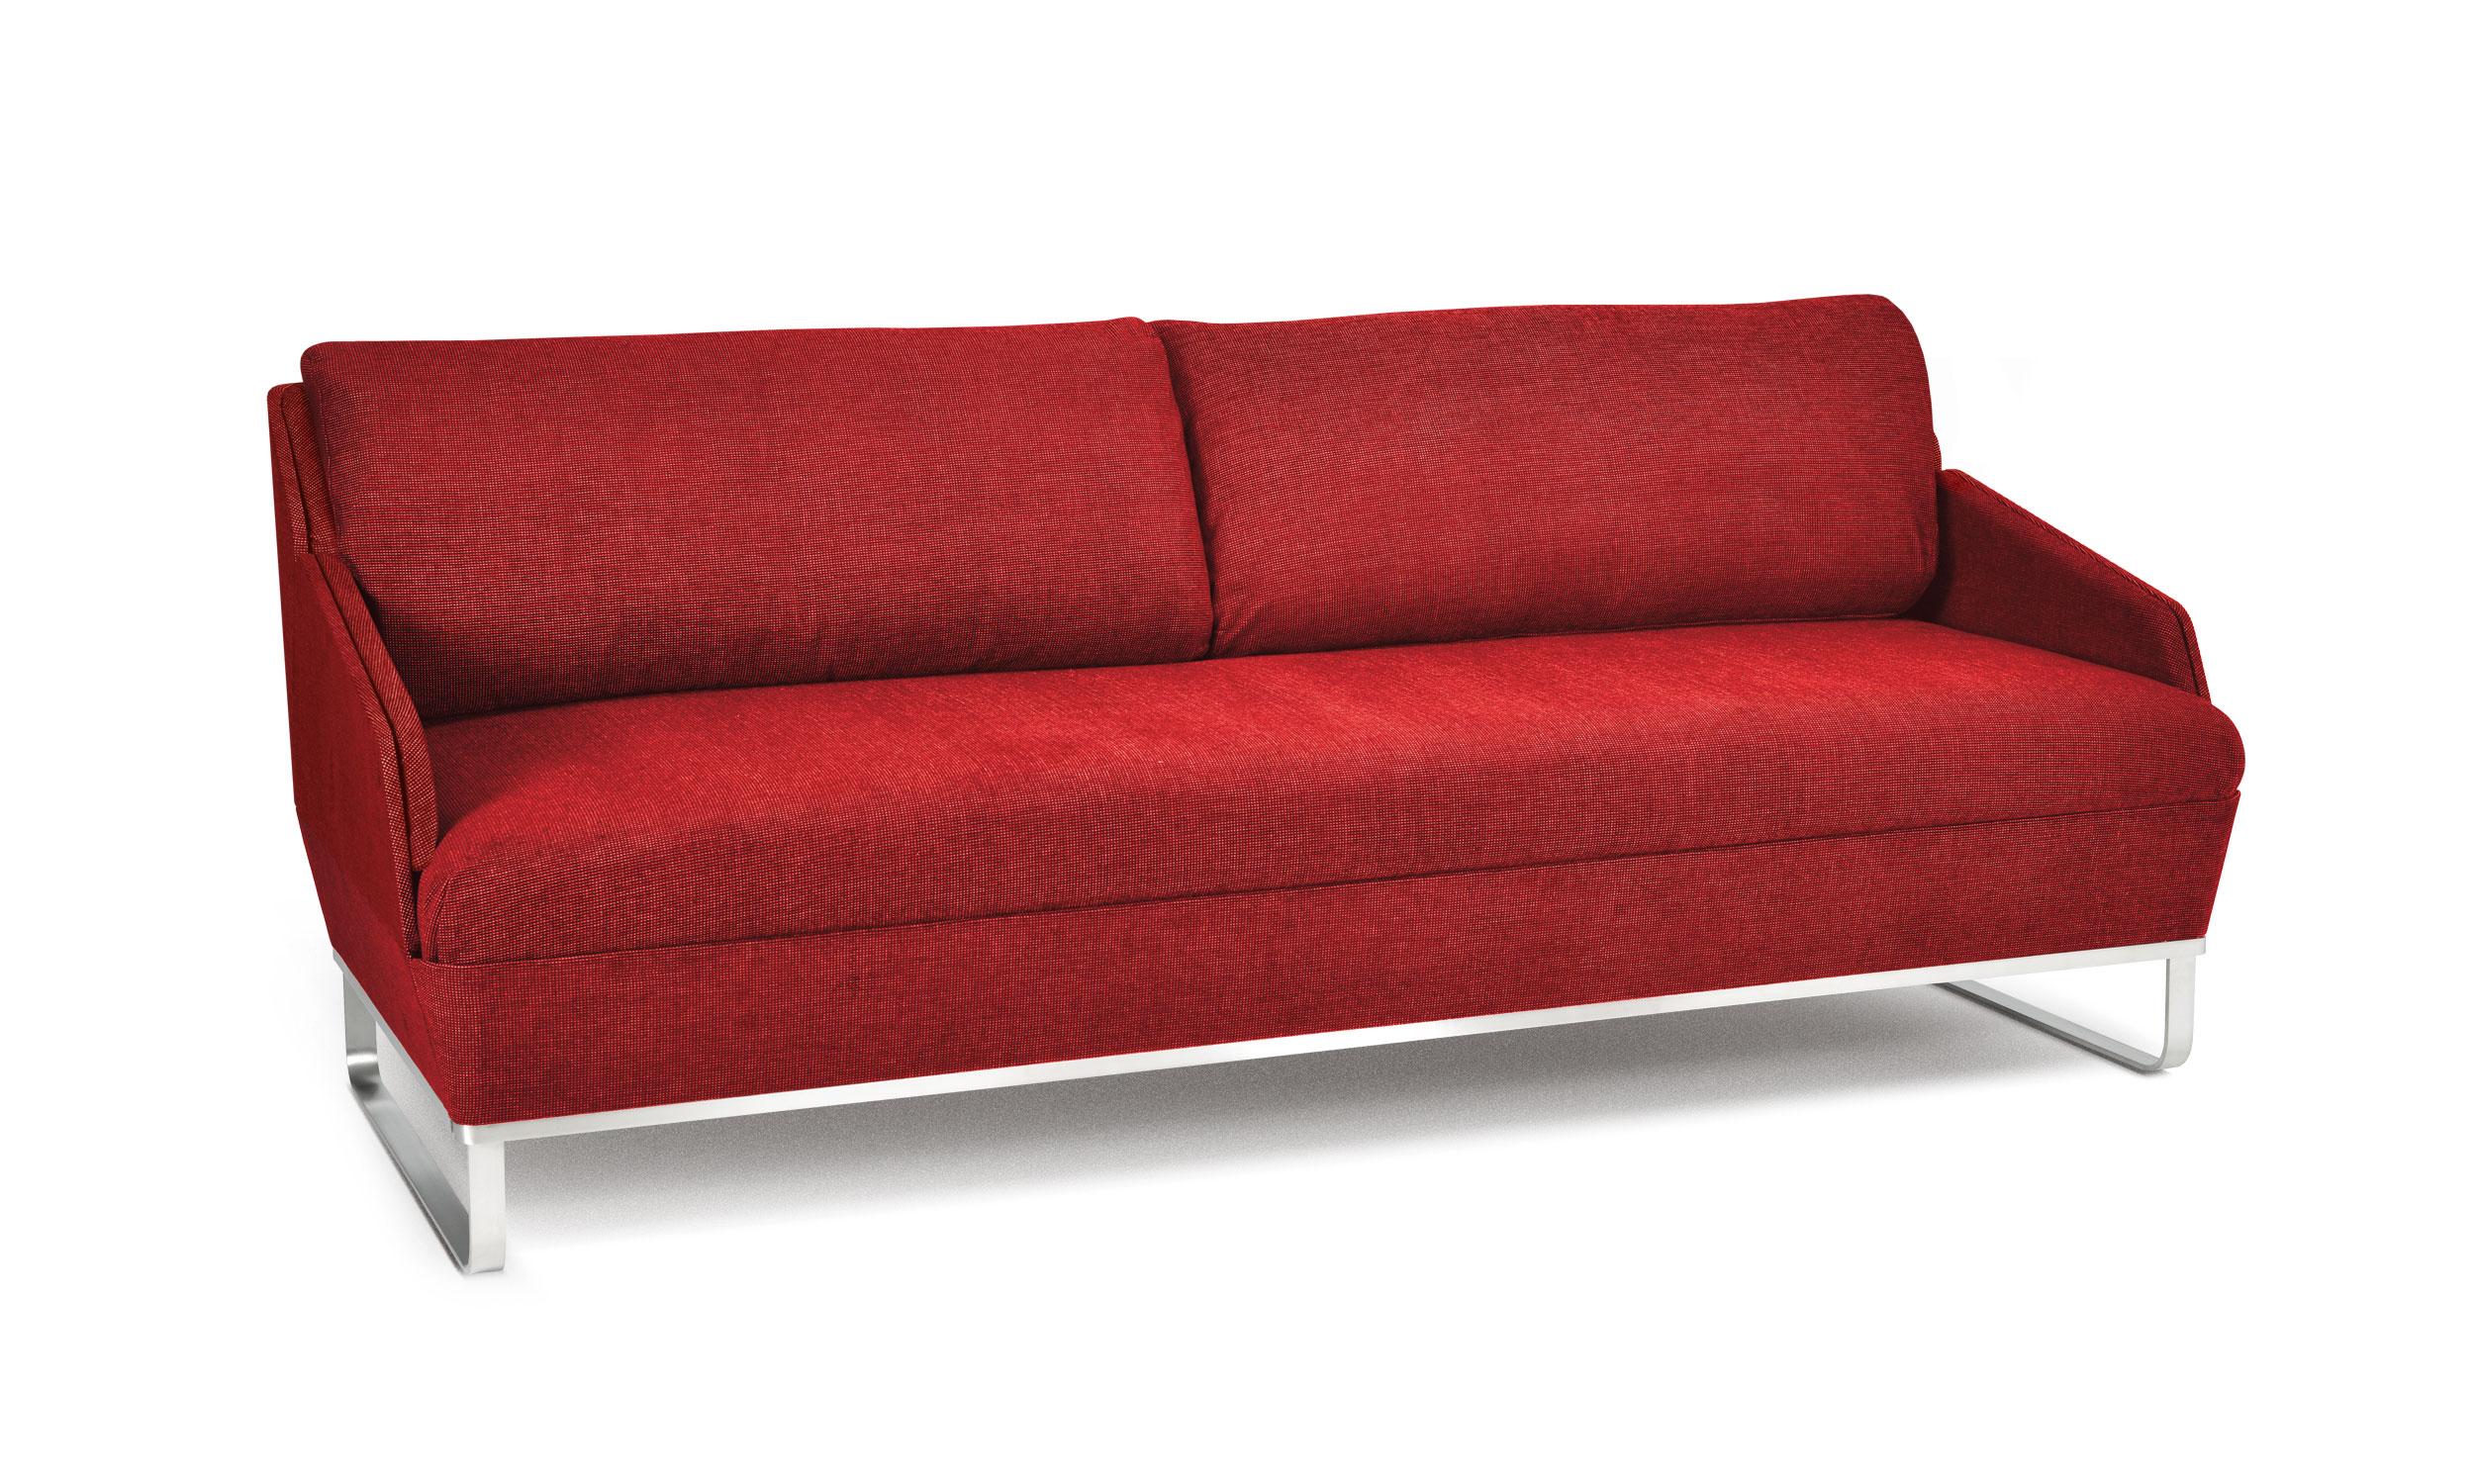  - sofa bed by swissplus